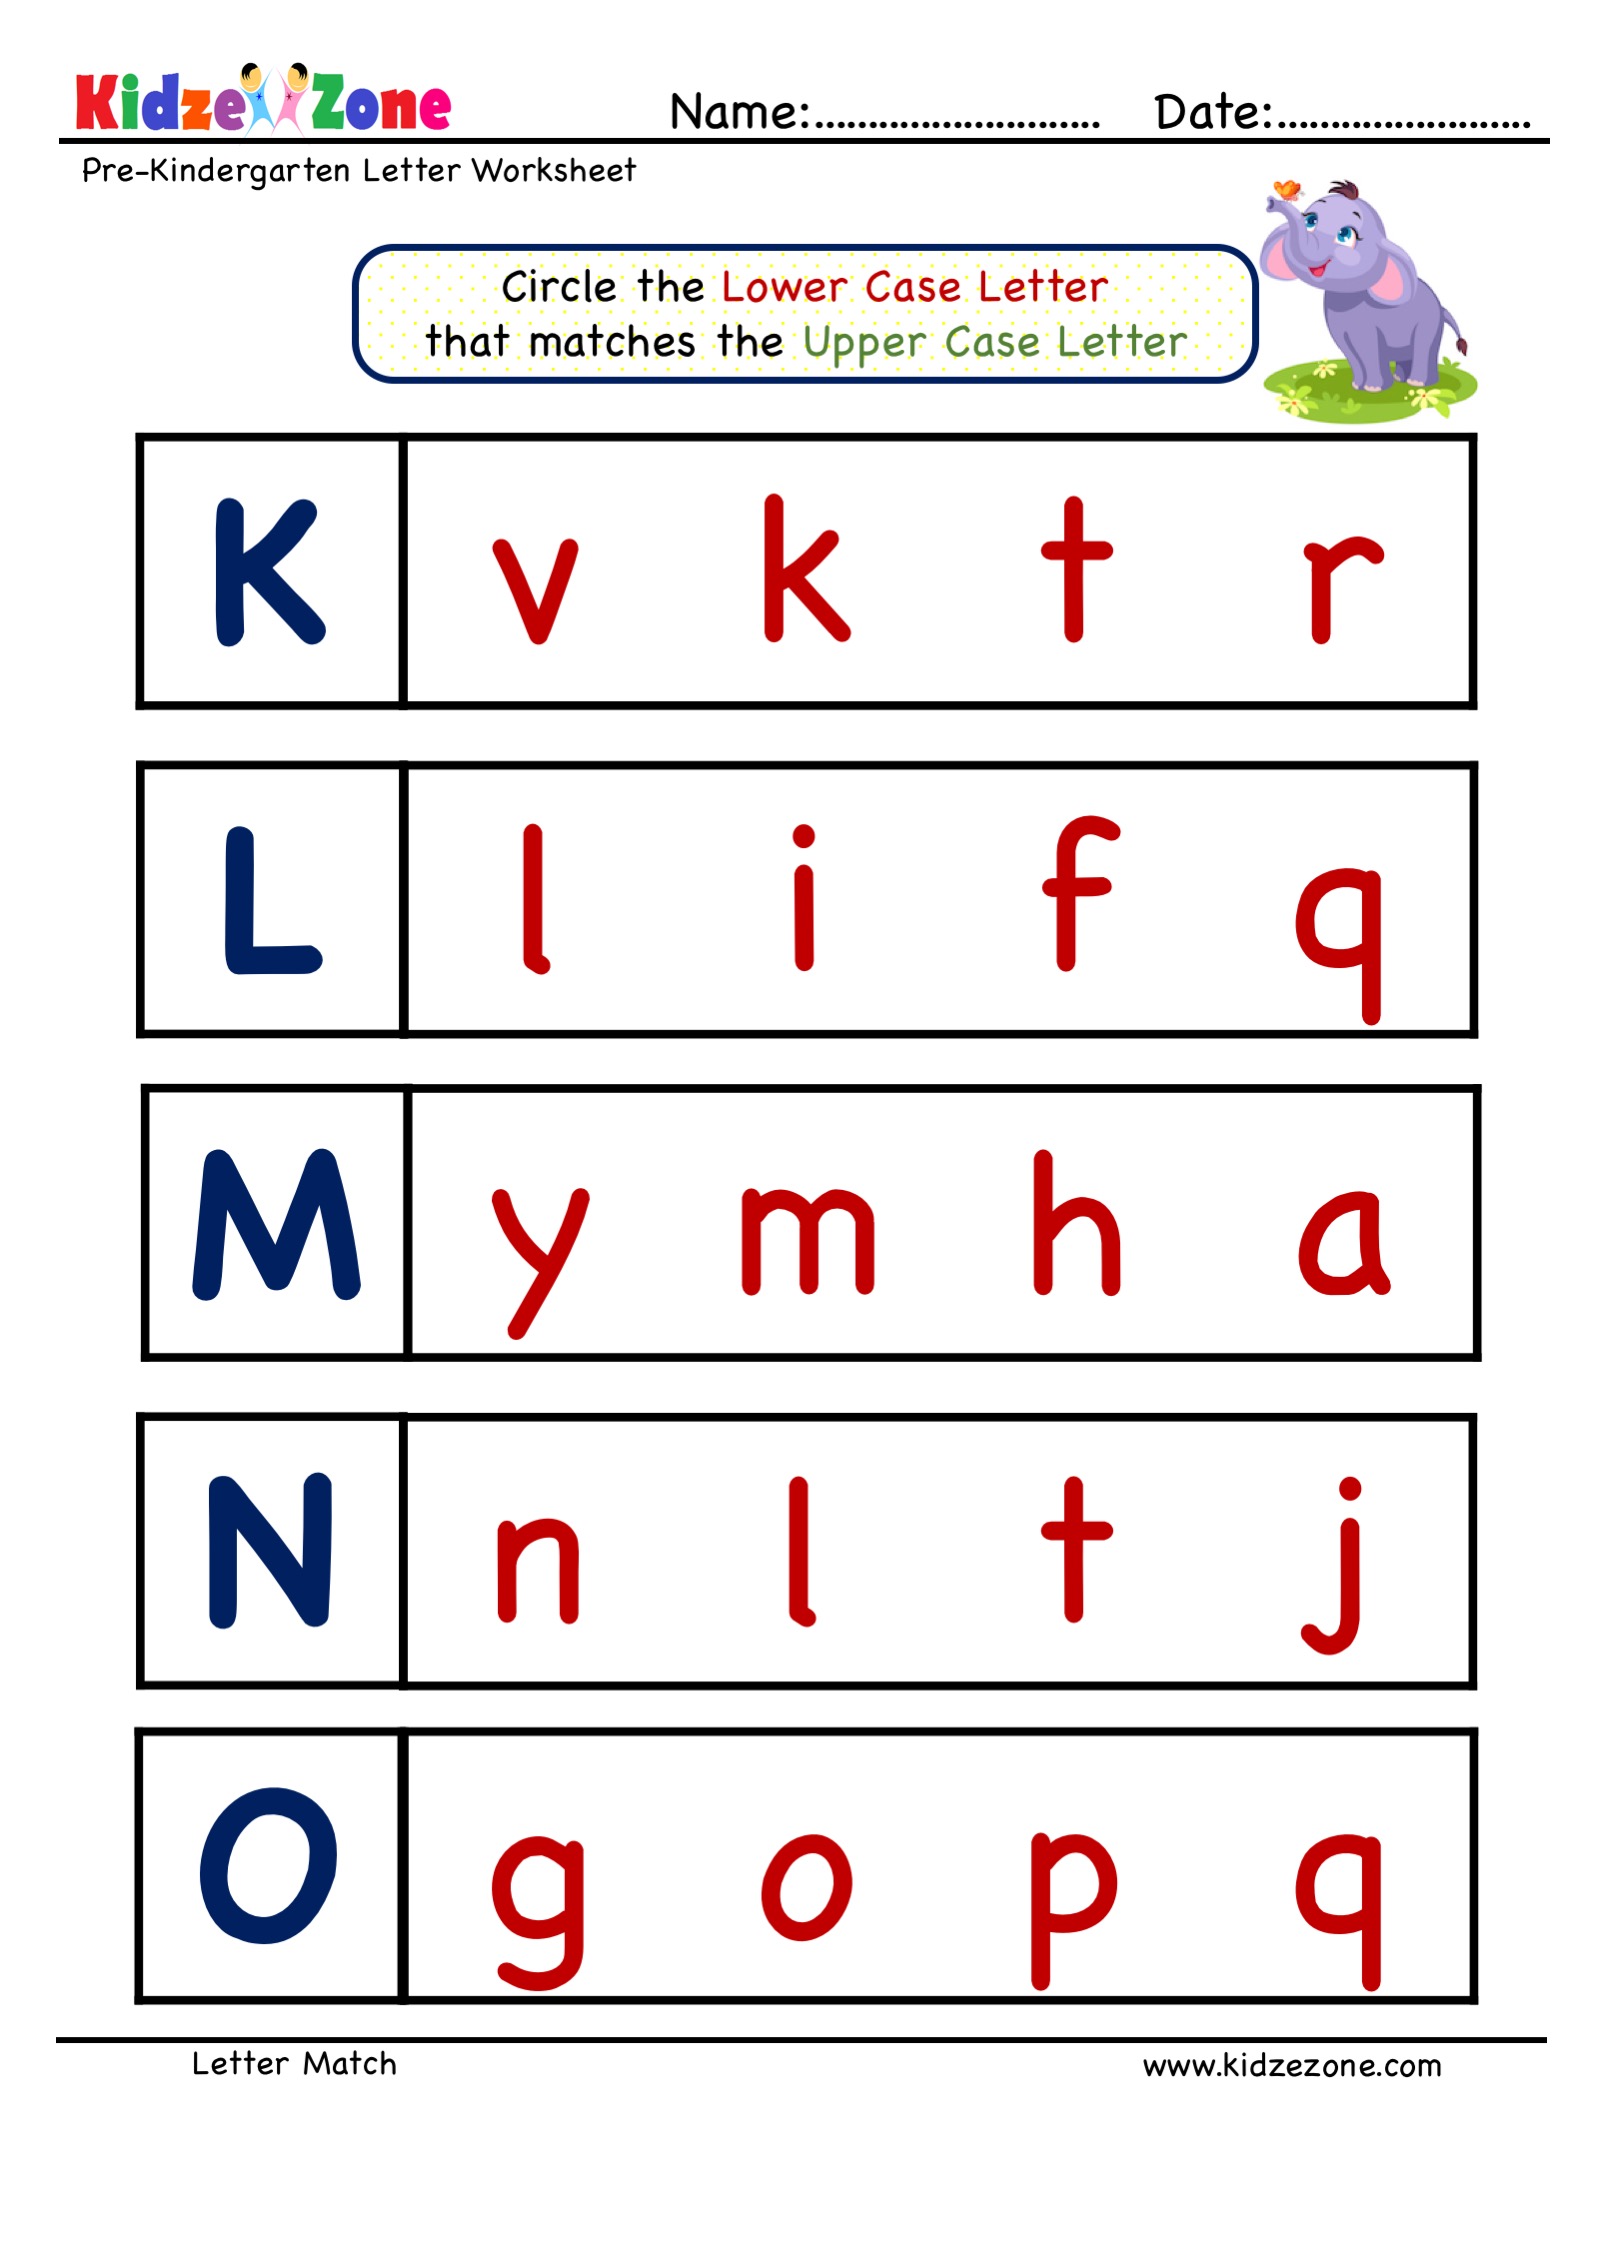 match-the-alphabet-worksheet-mirko-busto